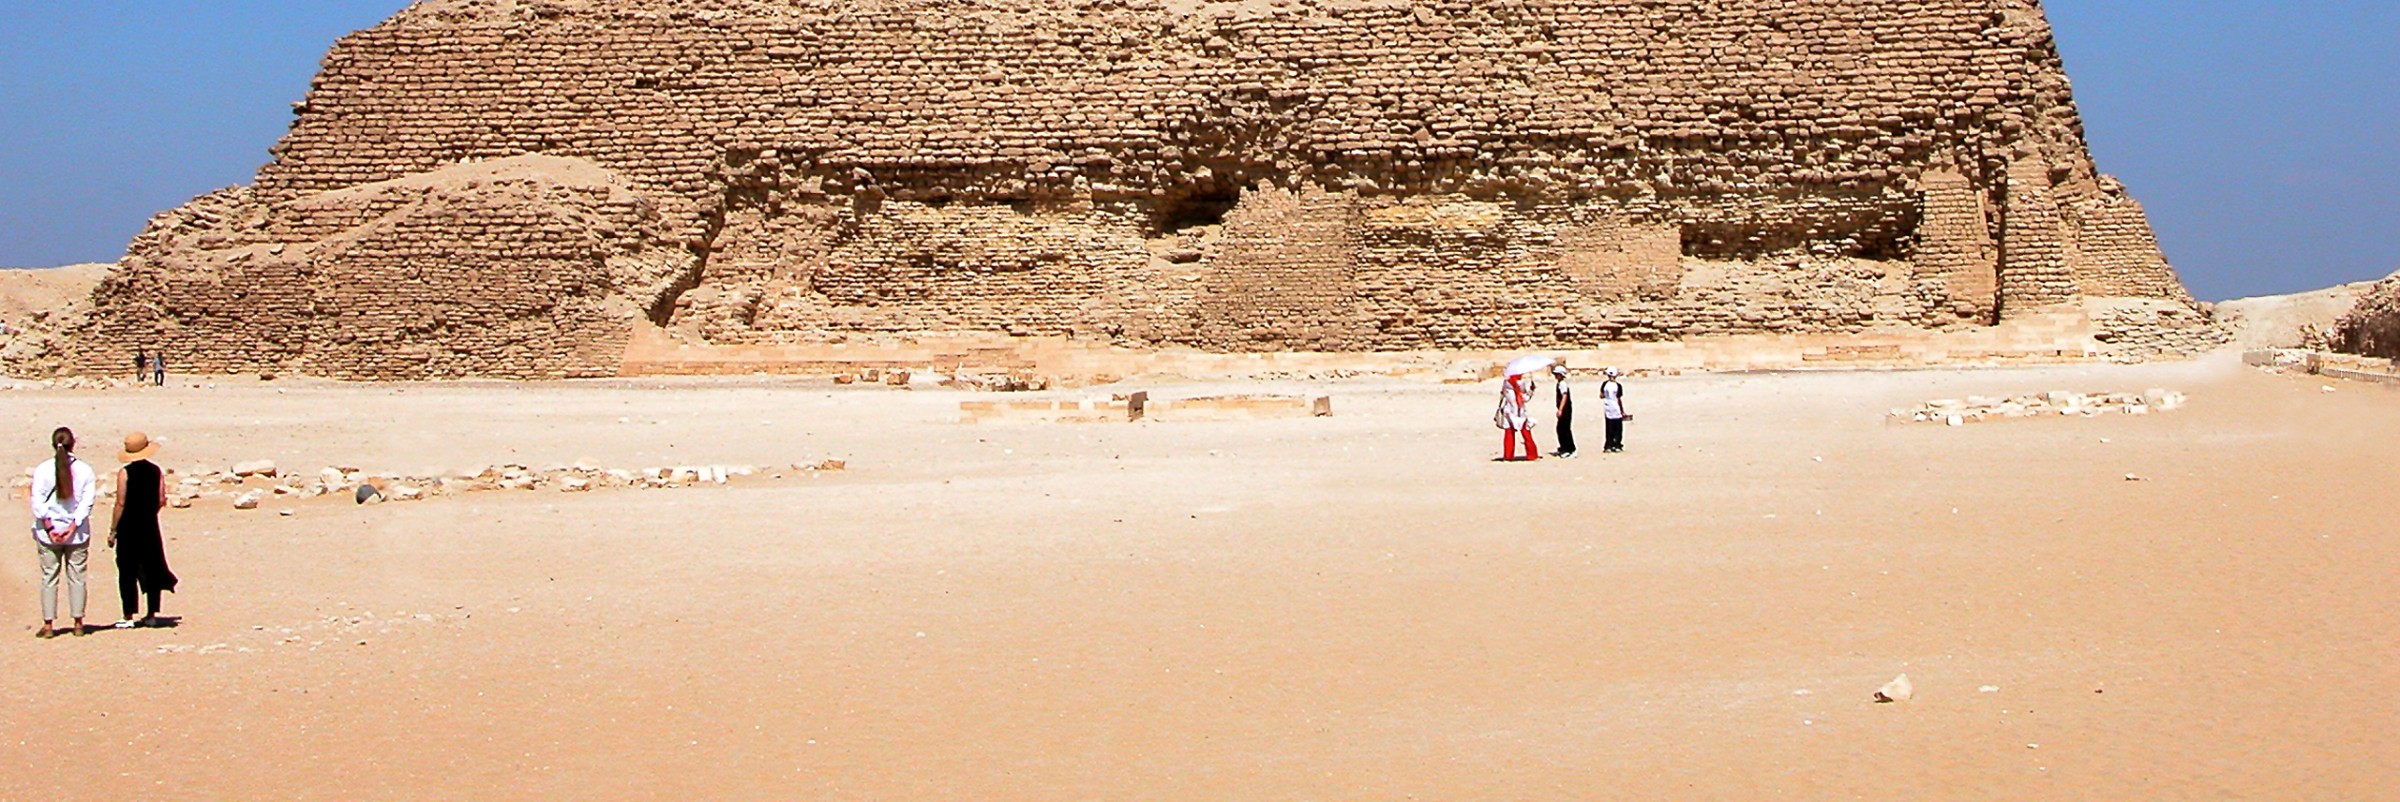 Pyramid of Djoser Saqqara Necropolis, Egypt